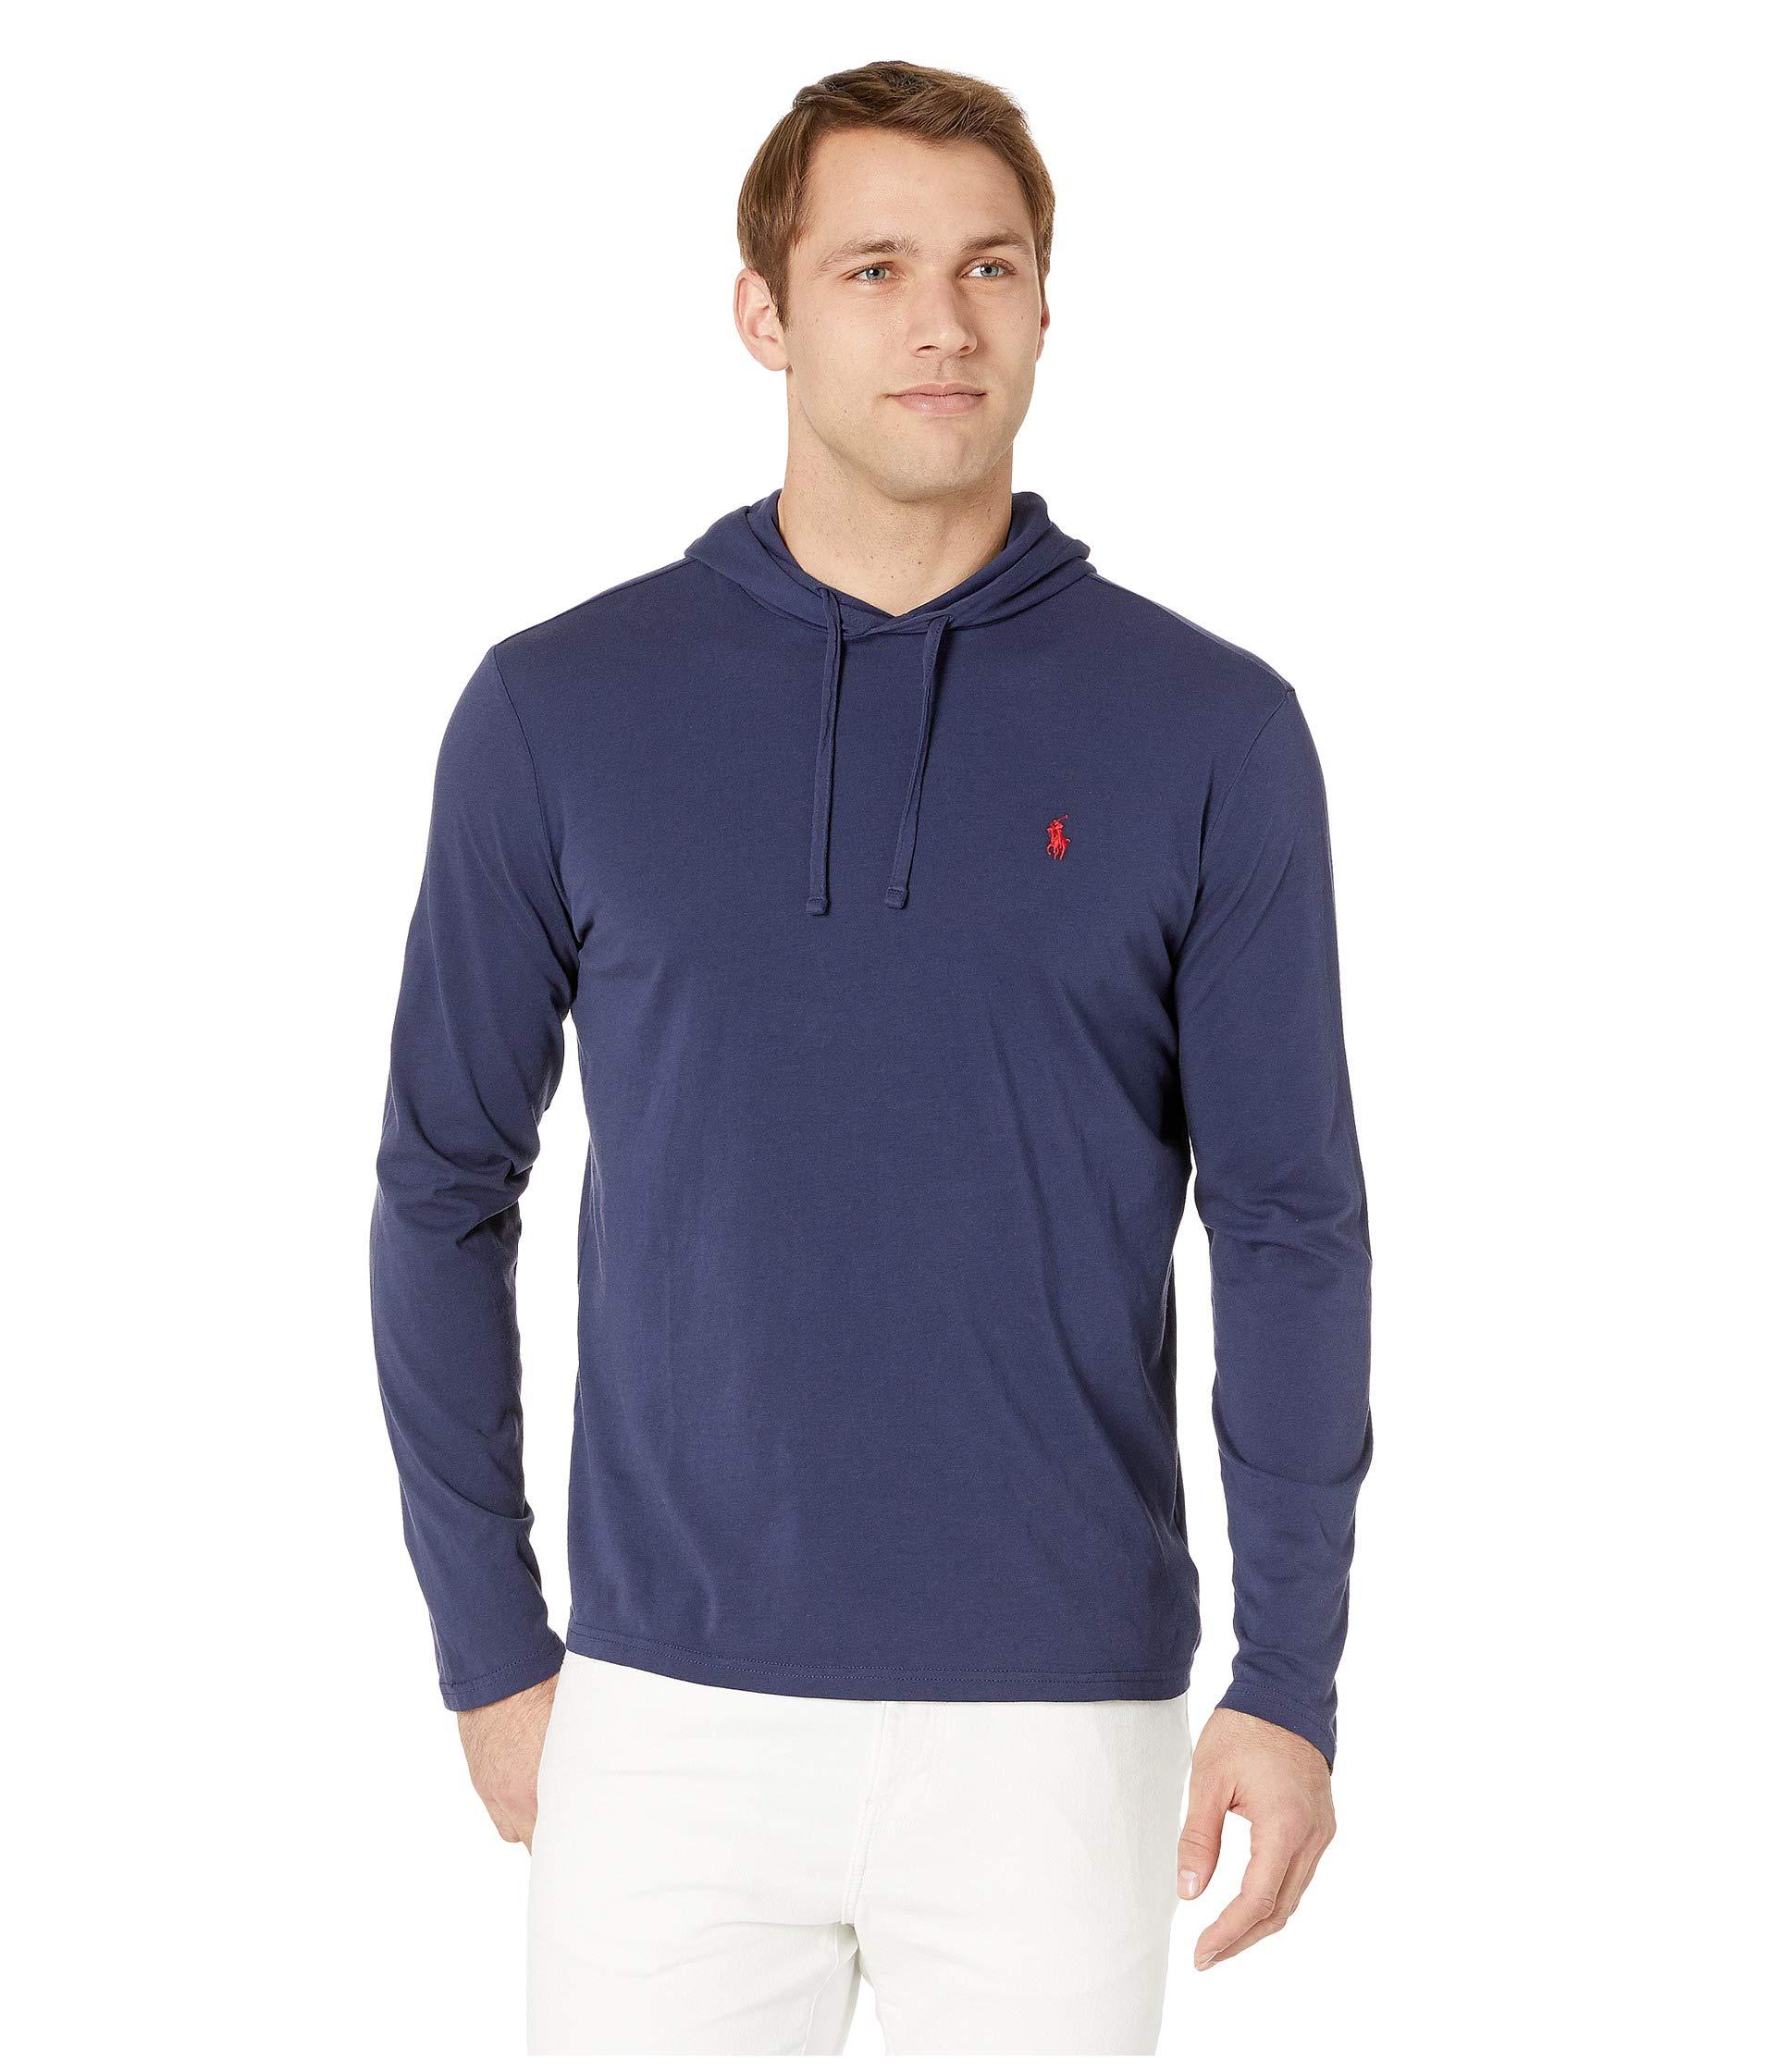 Lyst - Polo Ralph Lauren Hooded Jersey T-shirt (polo Black) Men's T ...